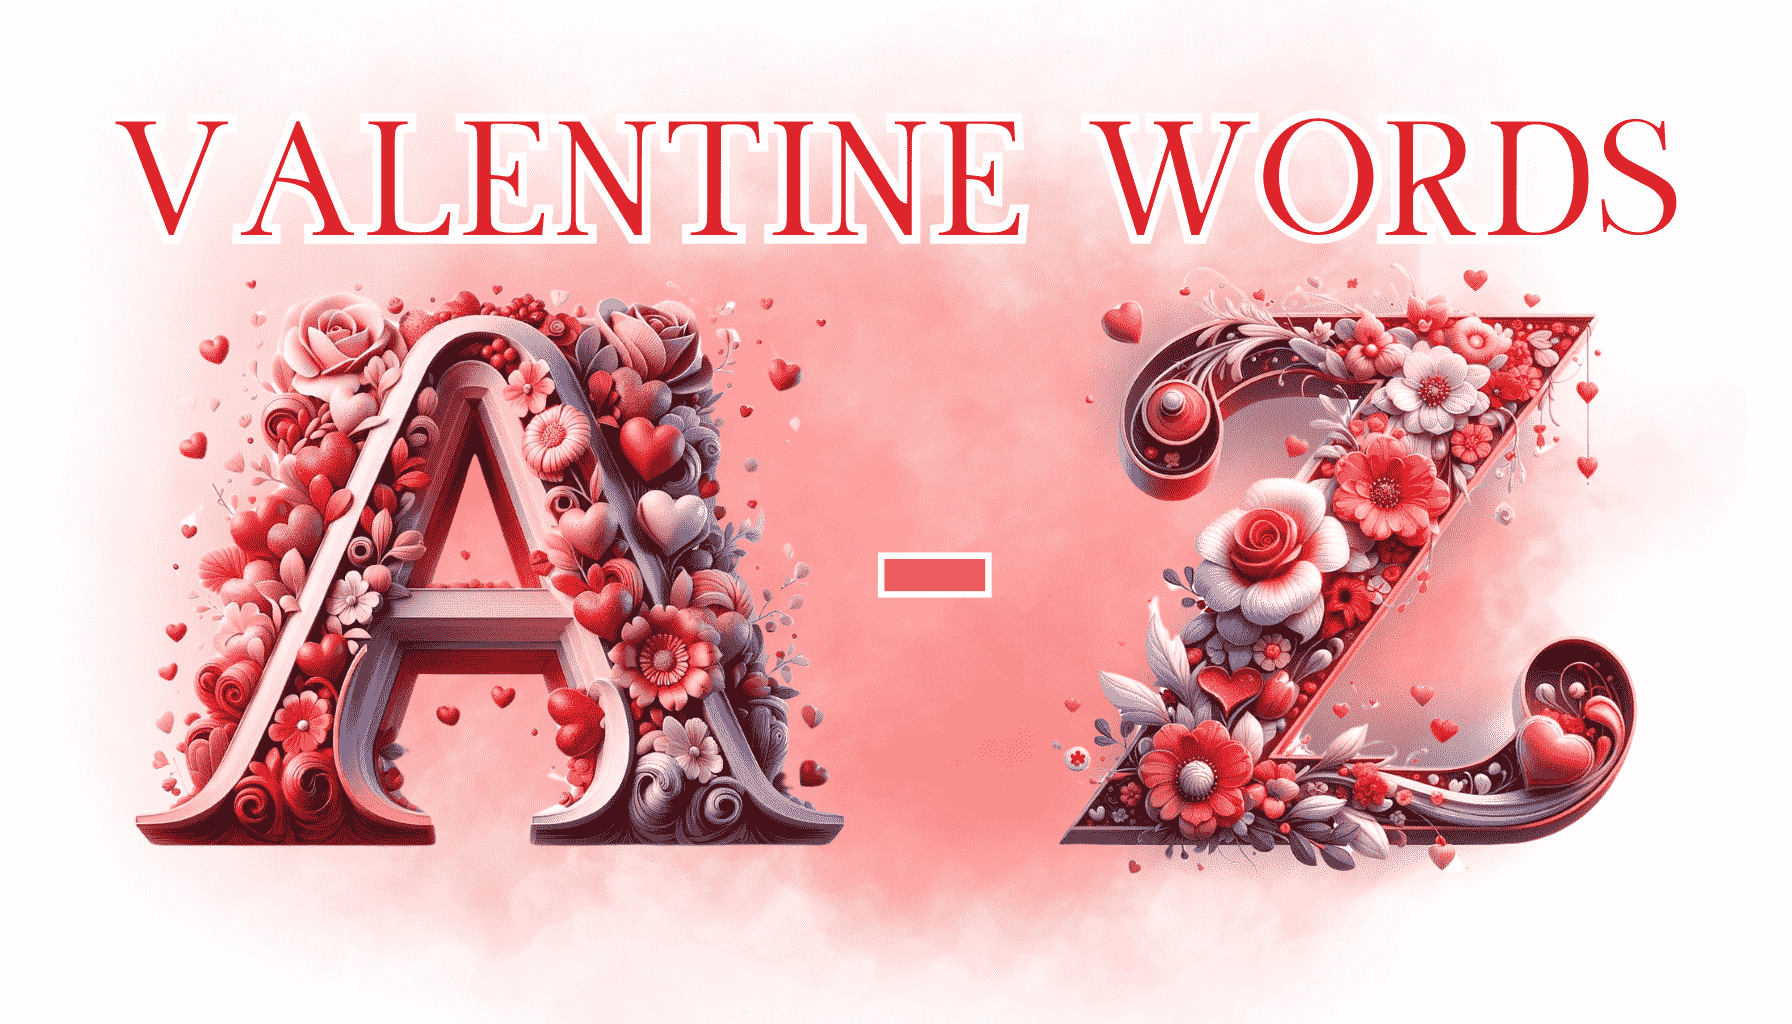 Valentine A-Z words